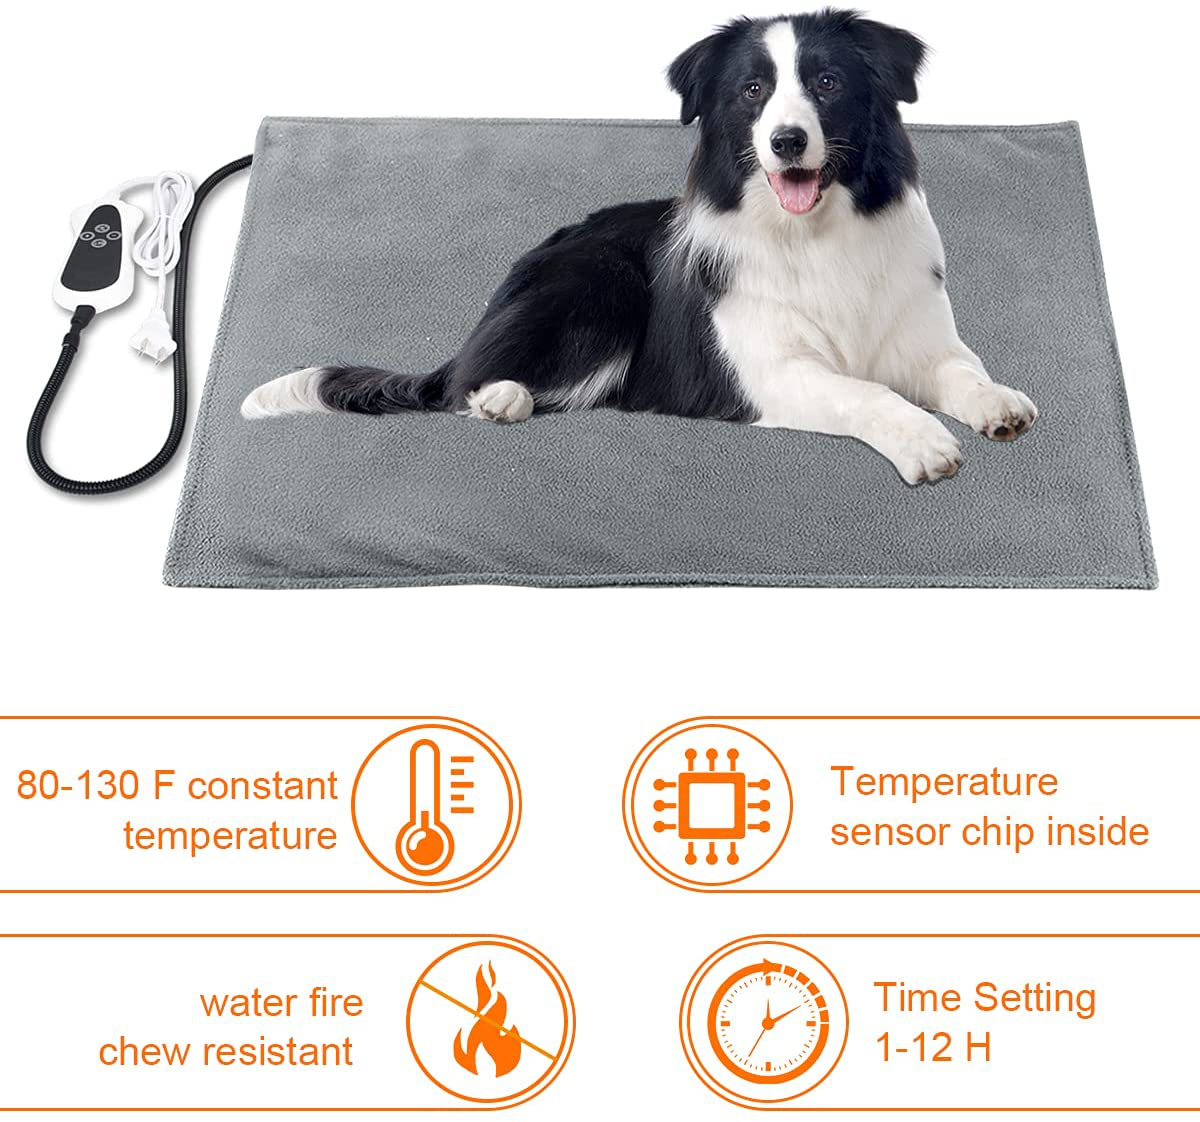 RIOGOO Pet Heating Pad, Upgrade Dog Cat Warming Pad with Timer, Safety Electric Dog Cat Heating Pad Waterproof Animals & Pet Supplies > Pet Supplies > Dog Supplies > Dog Beds RIOGOO   